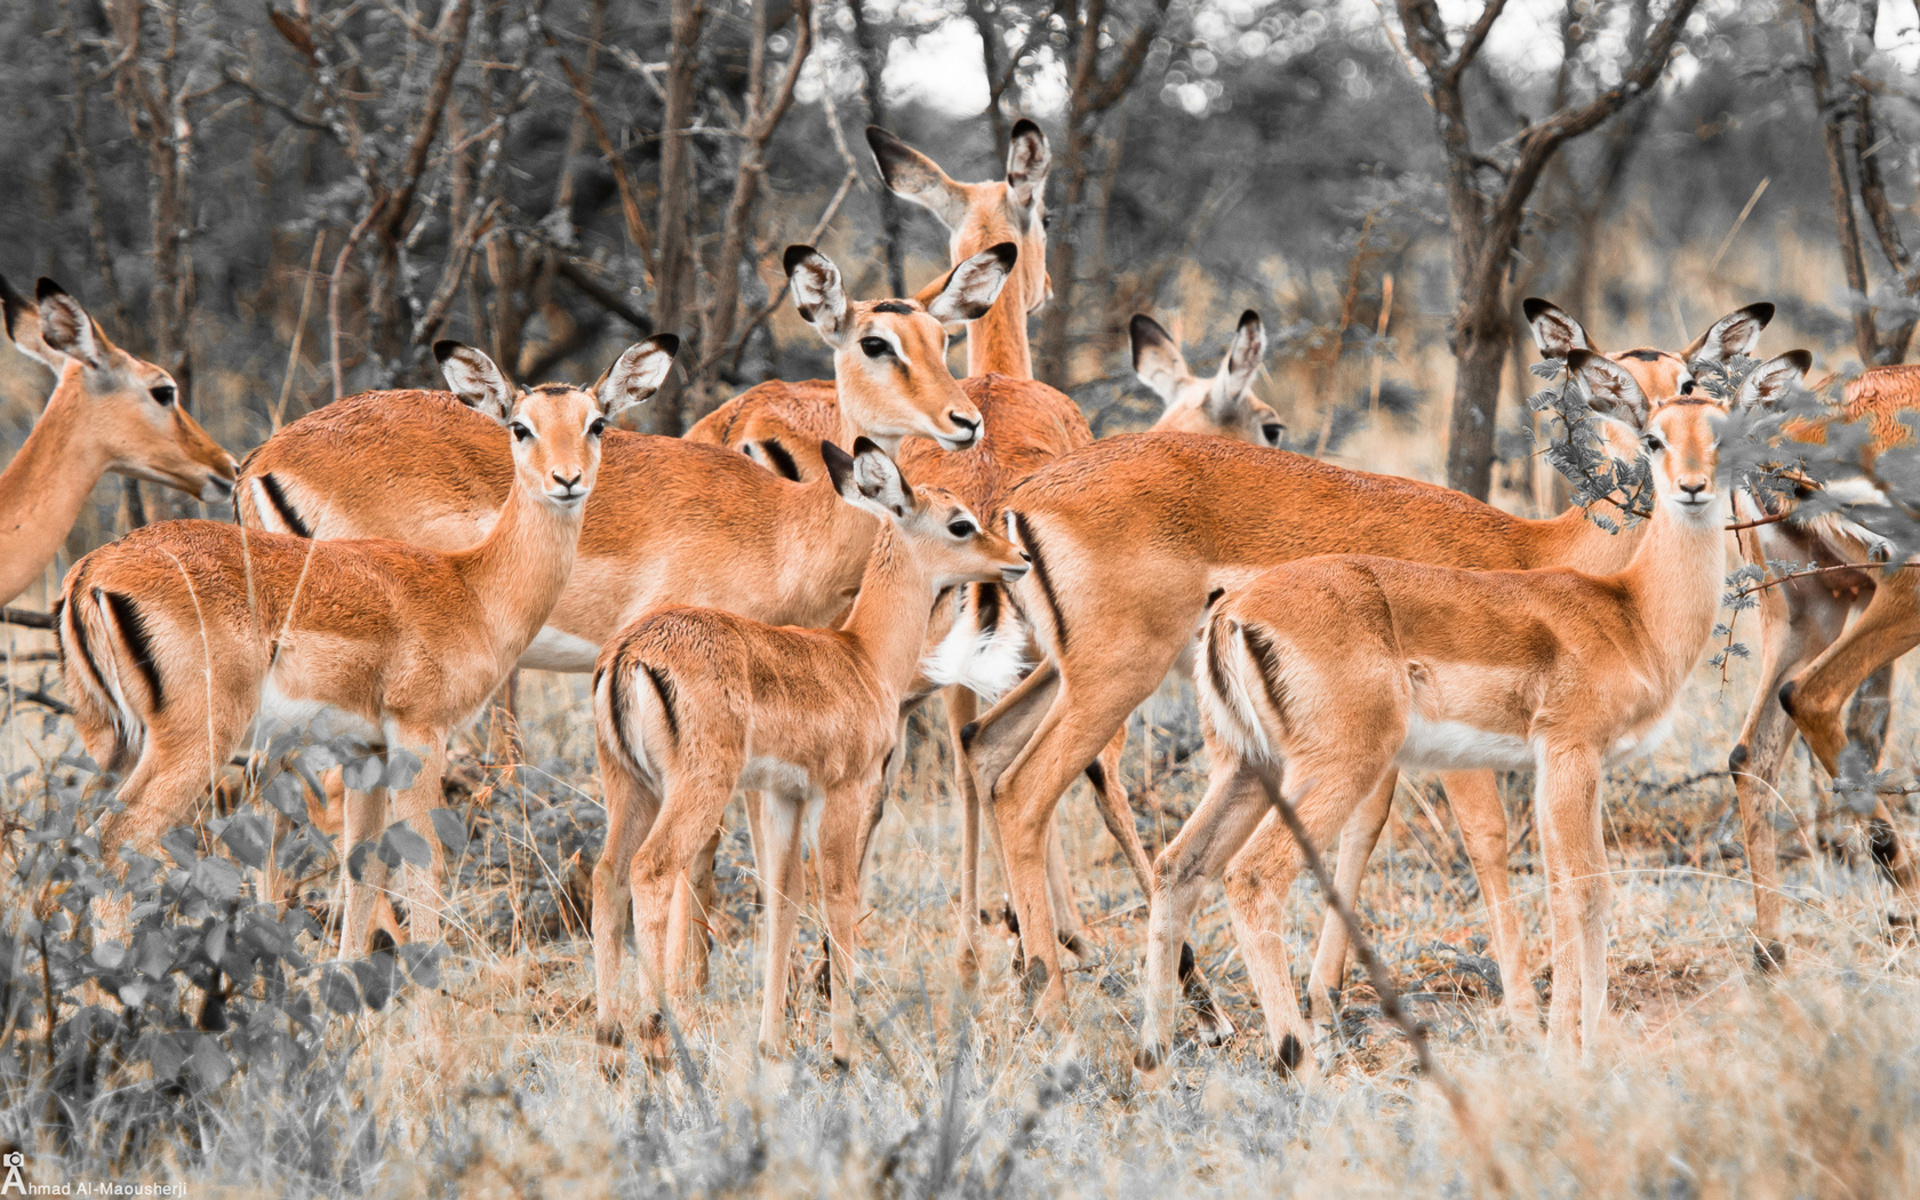 impalas, Ahmad al mousherji, Deer, Animals Wallpaper